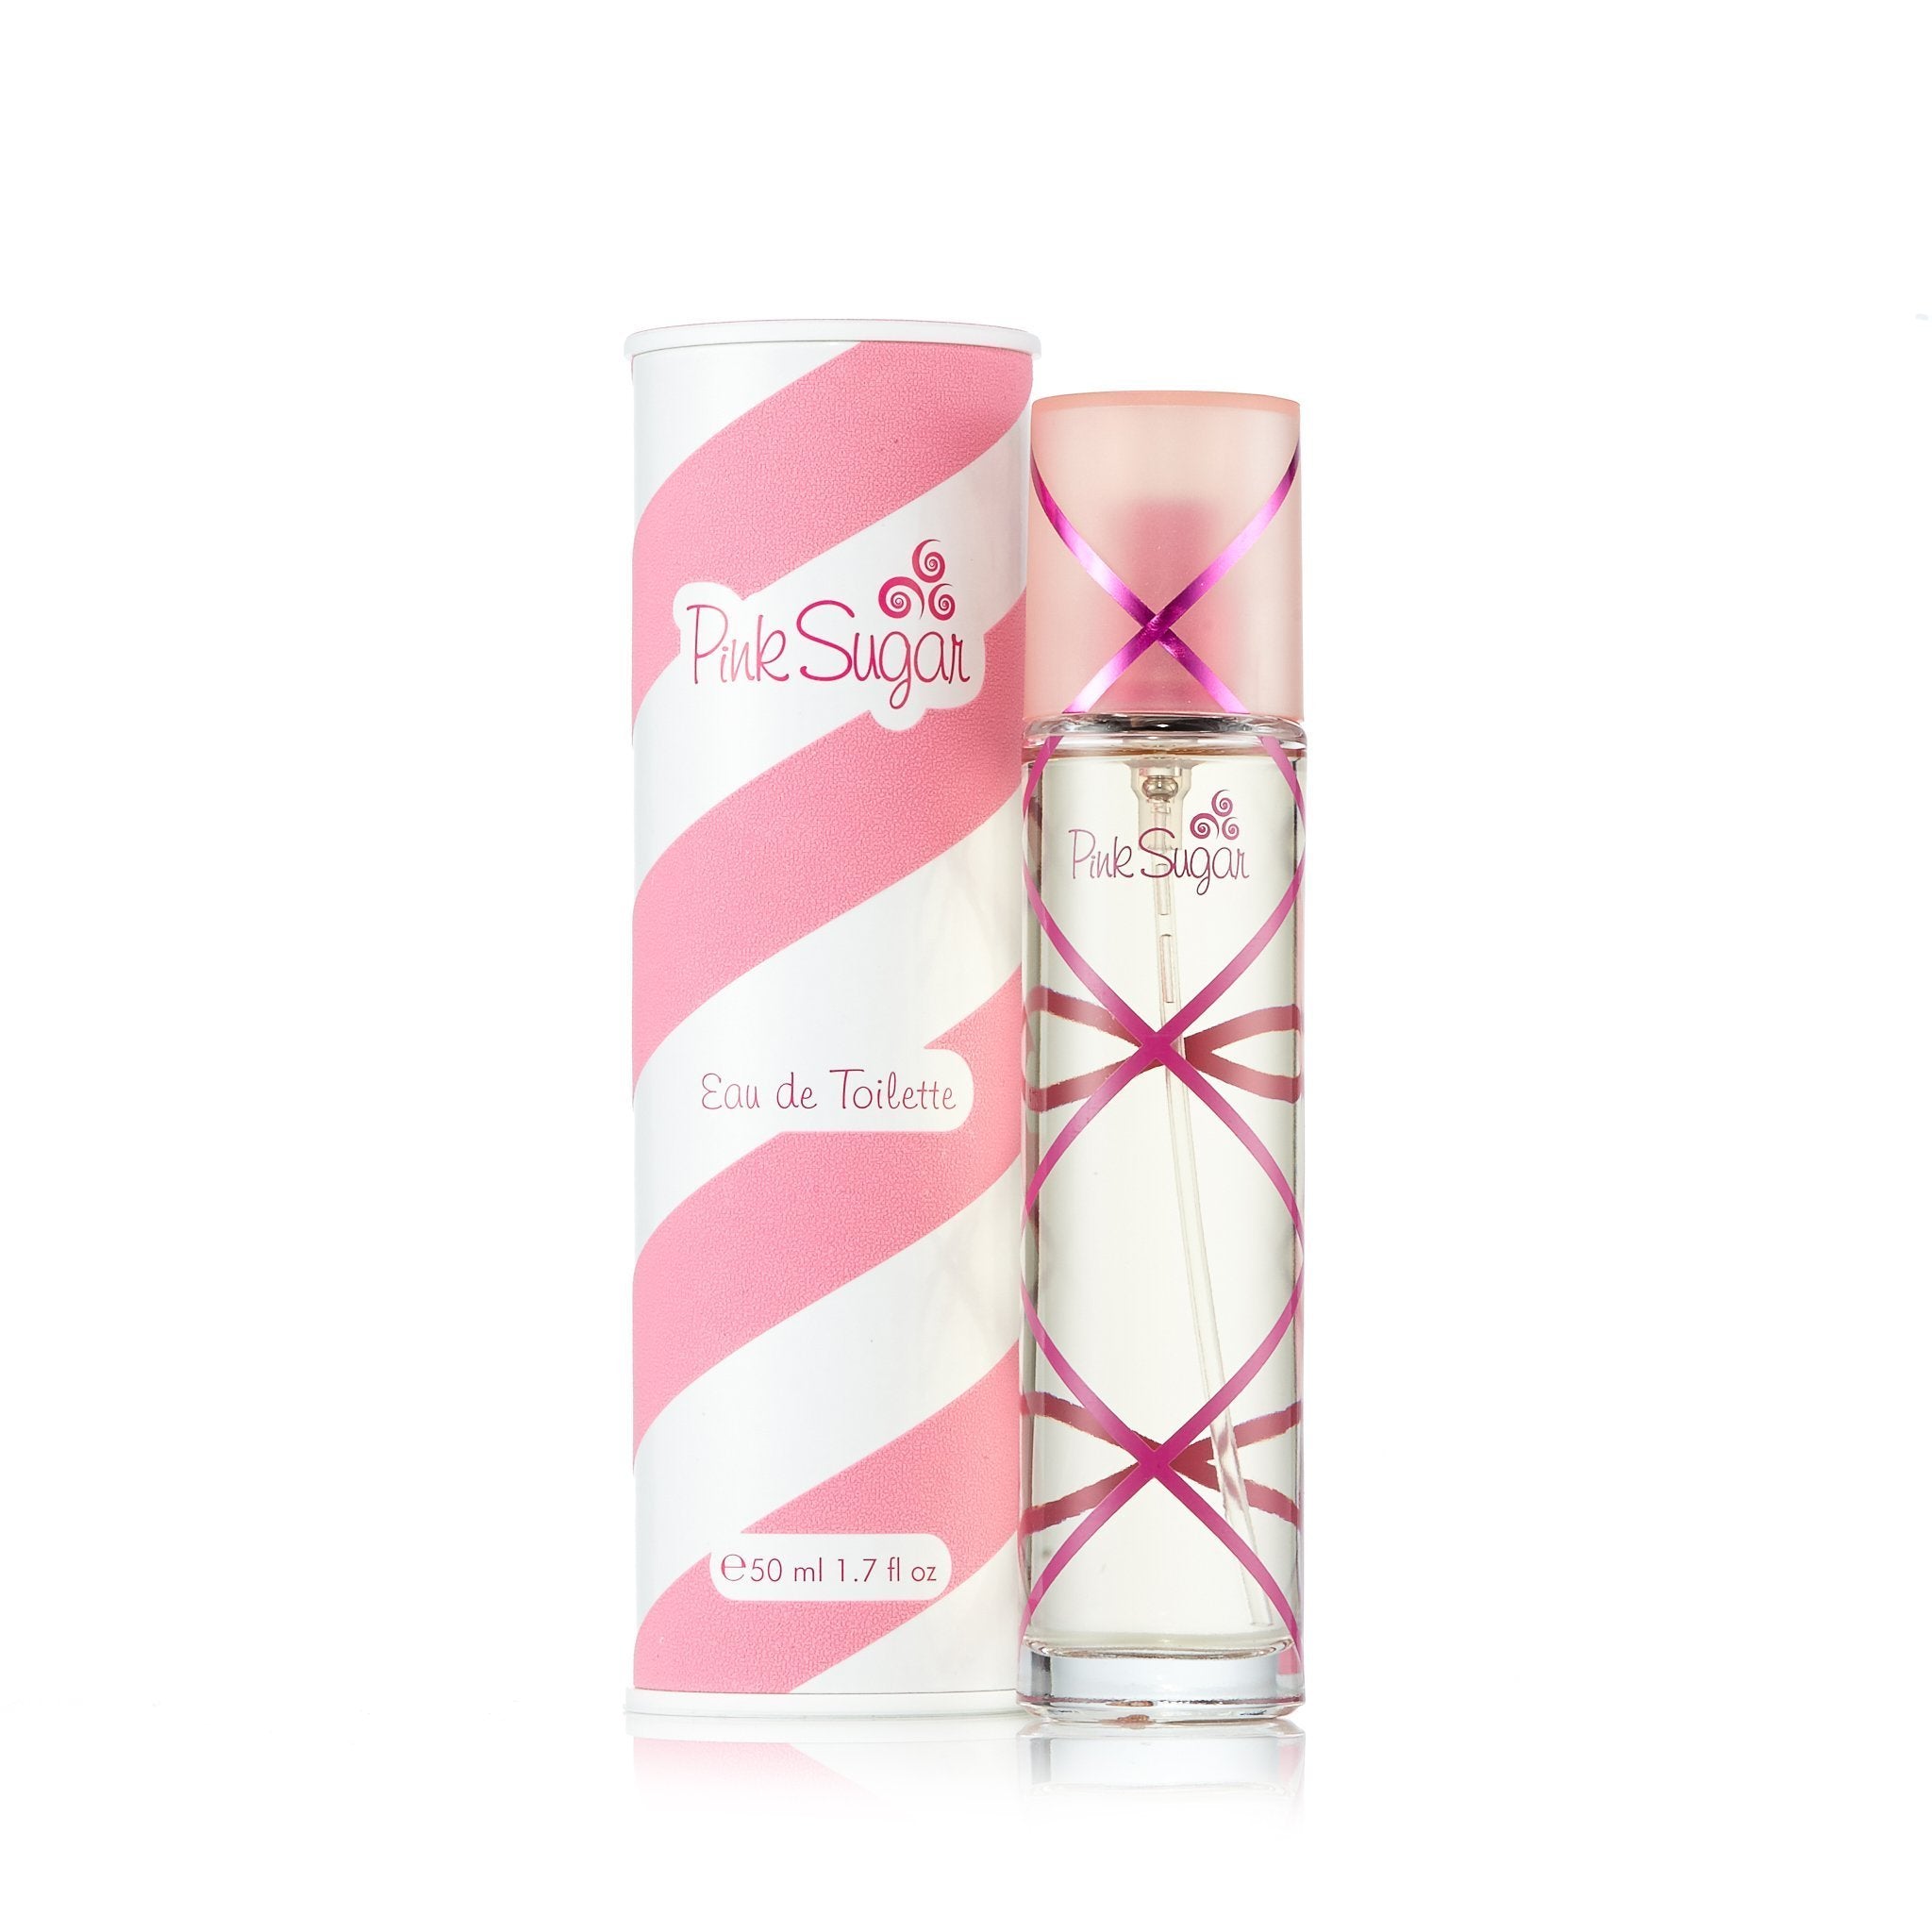 Zucchero a Velo Aquolina perfume - a fragrance for women and men 2015